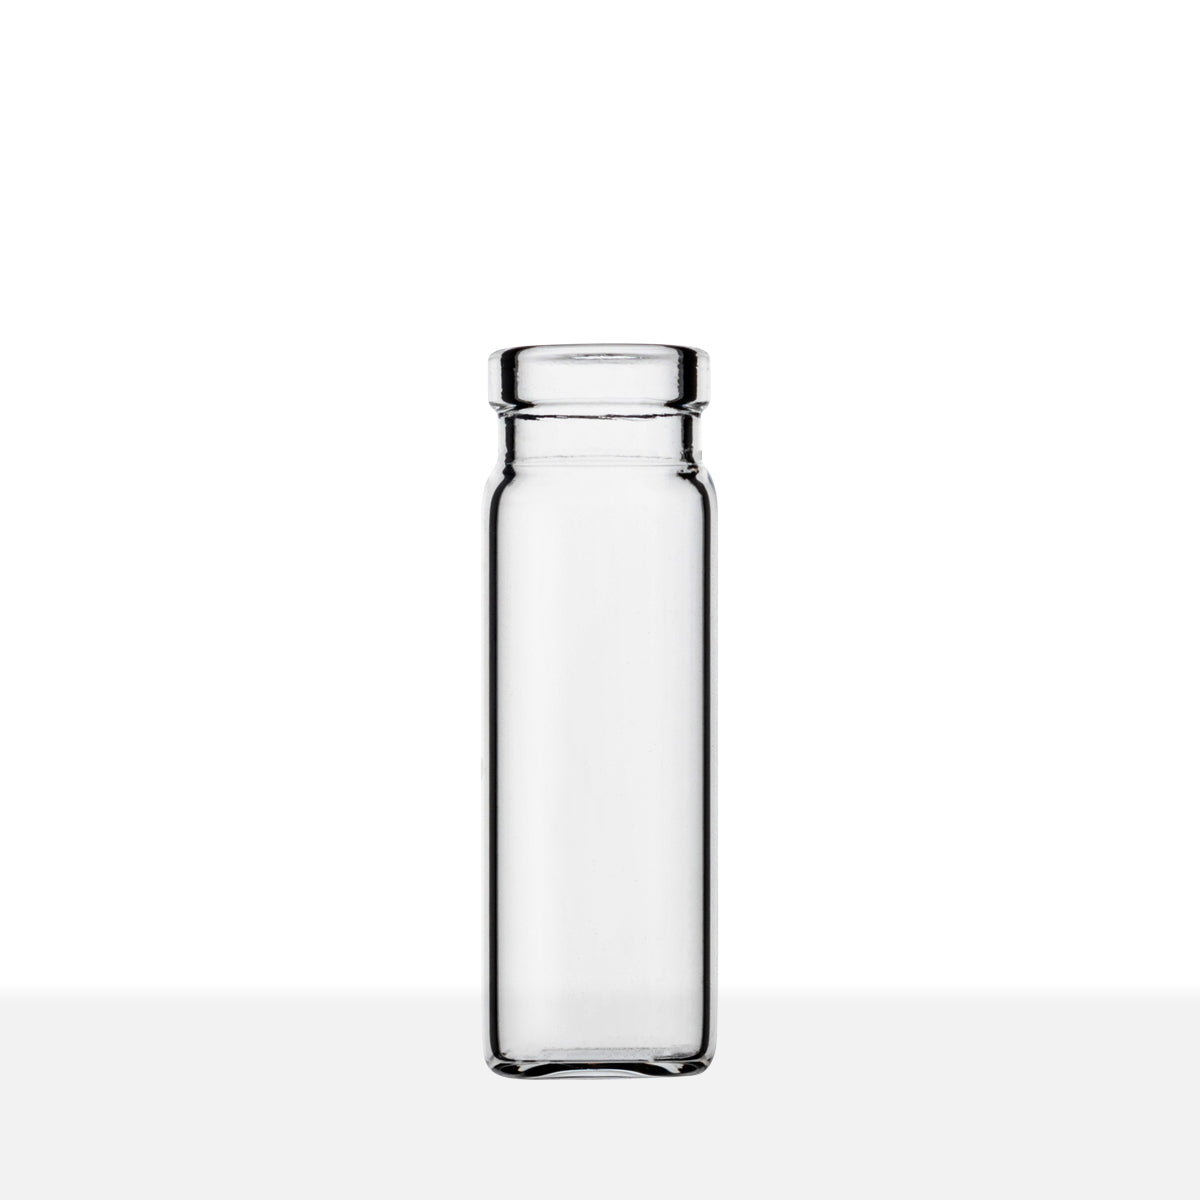 PATENT LIP GLASS VIALS - CLEAR Item #:VCPC1545